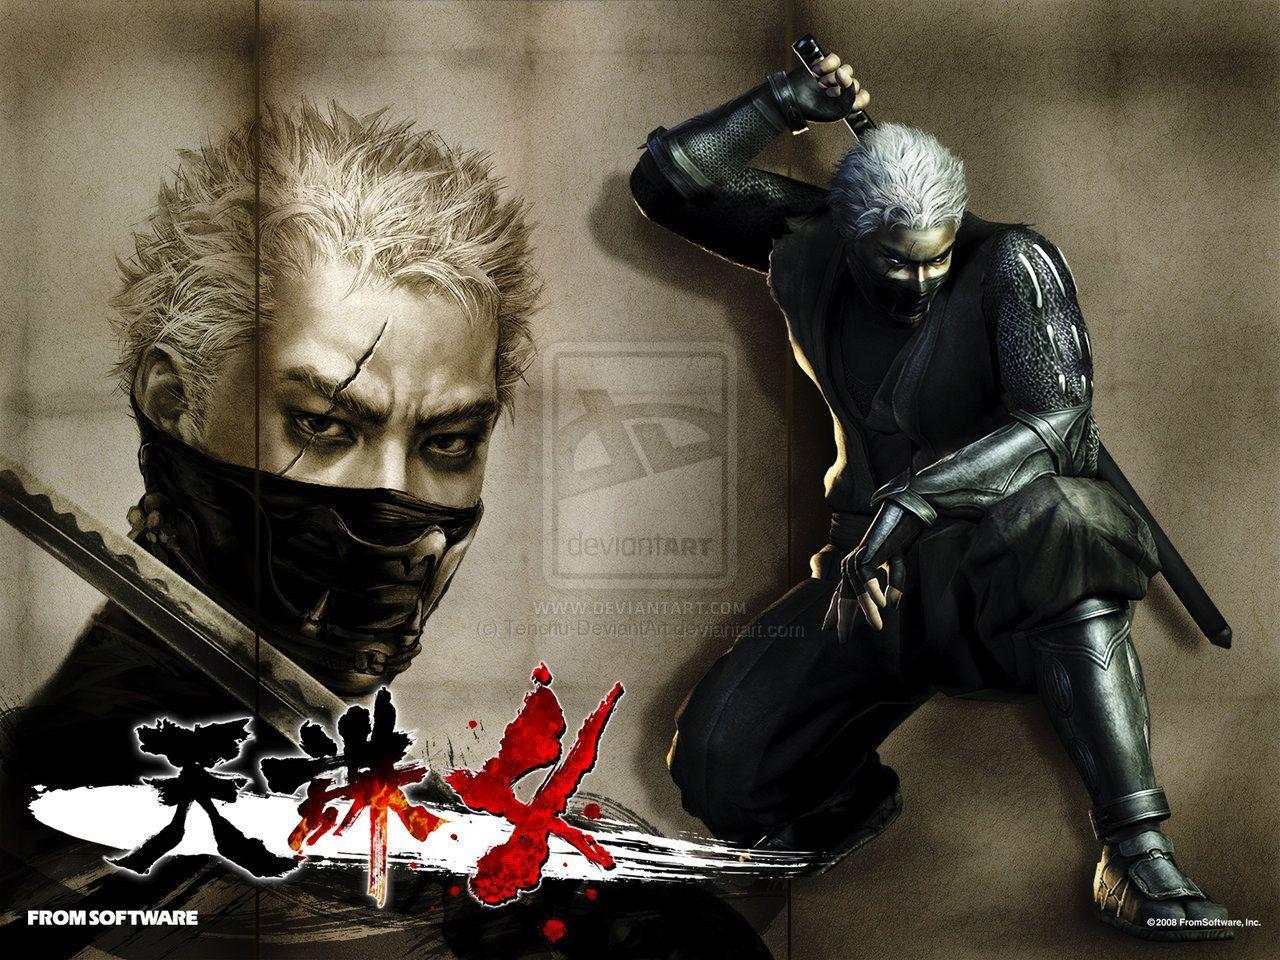 Rikimaru Tenchu Art. Ninpo. Ninjas, Assassin and Samurai